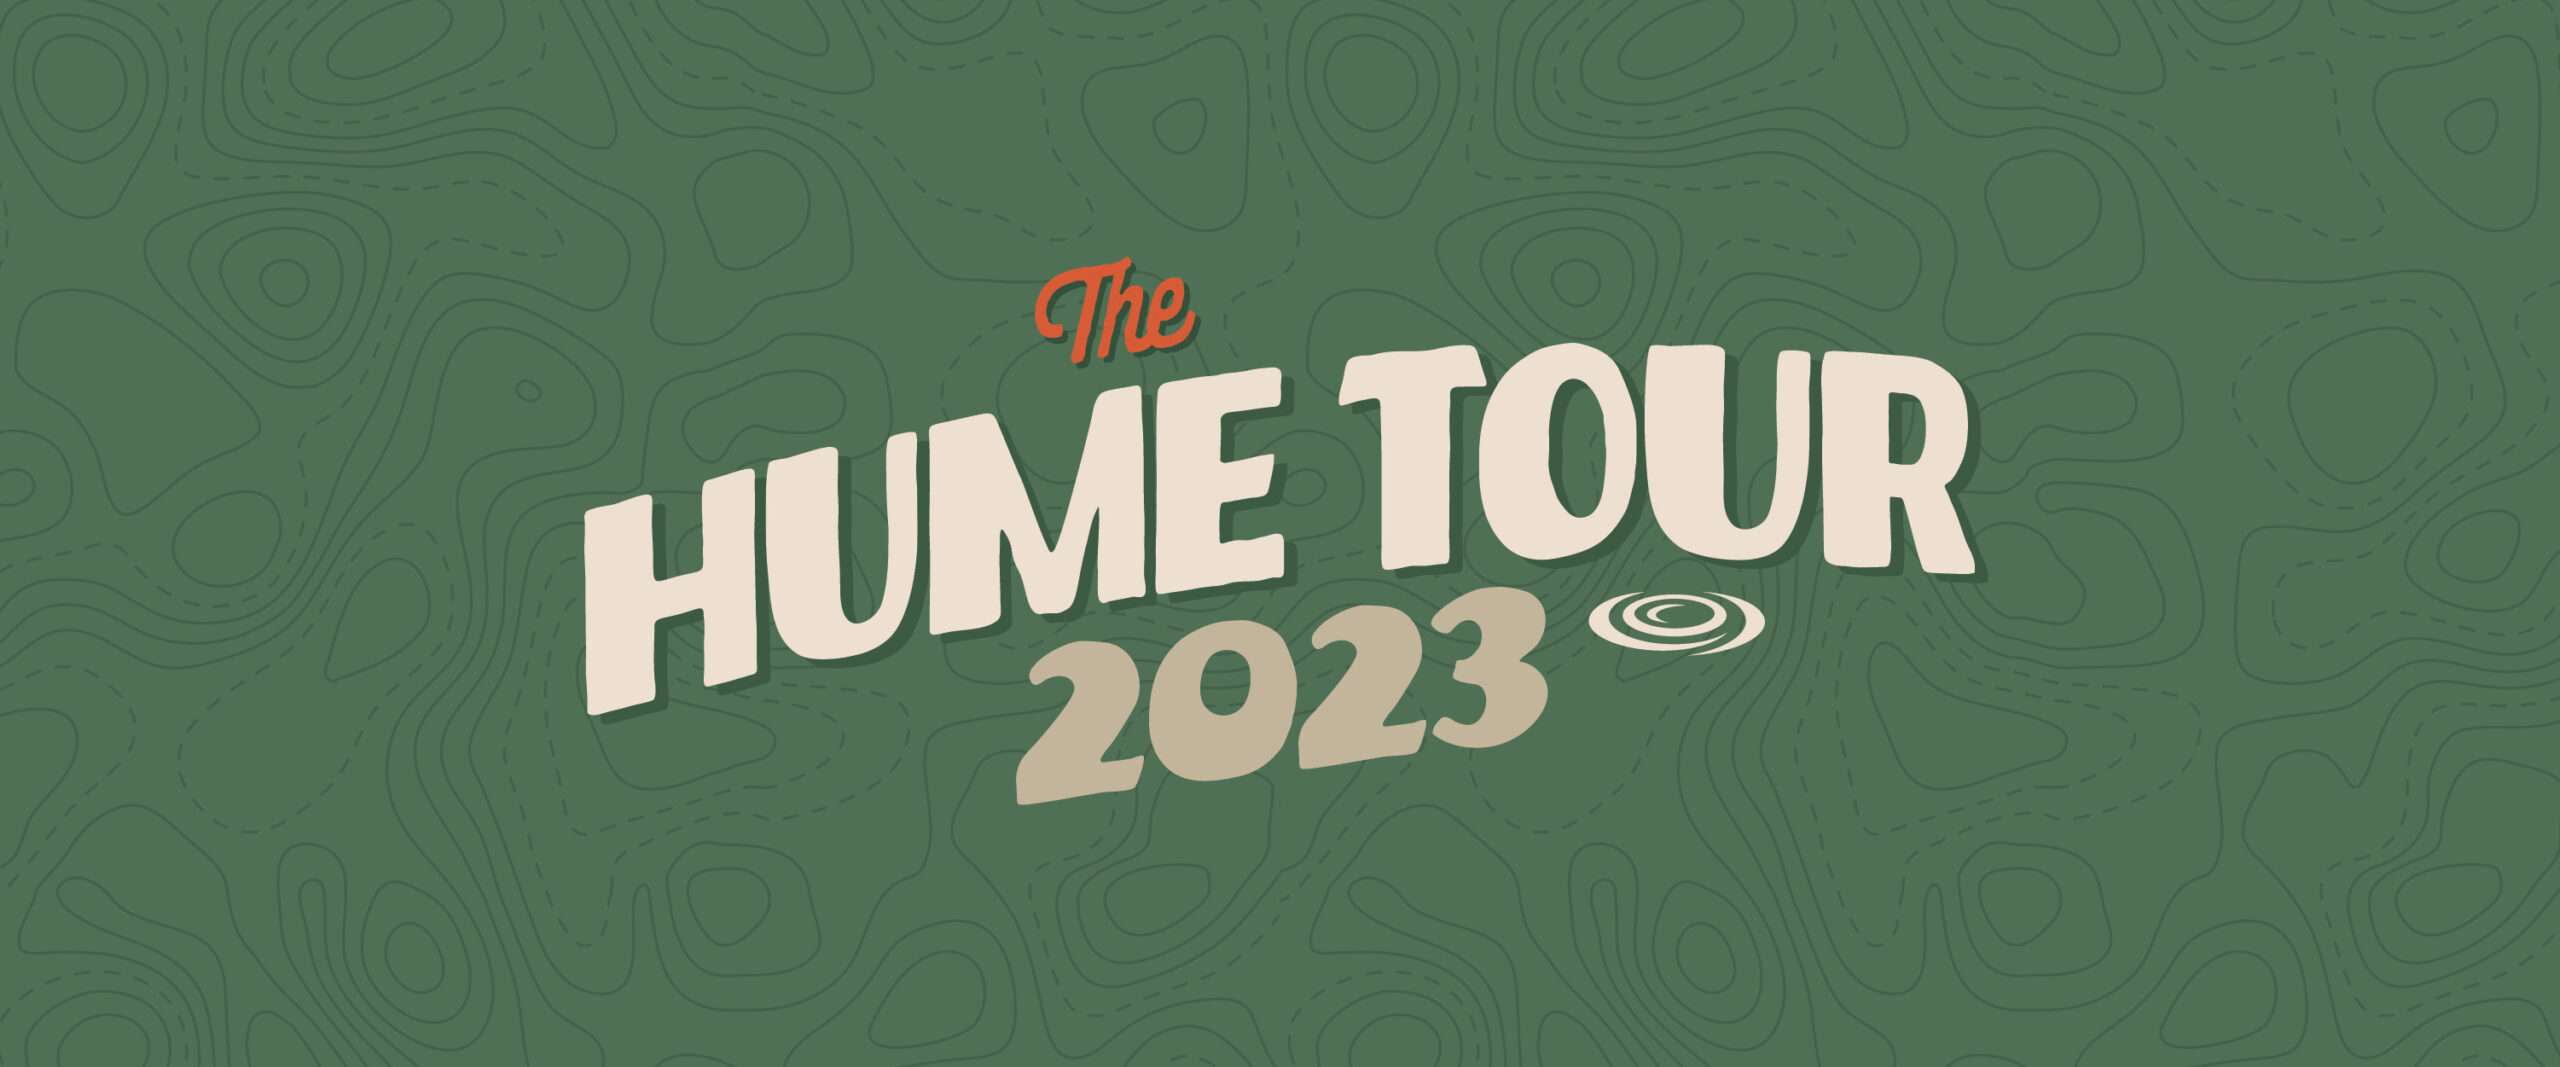 The Hume Tour 2023